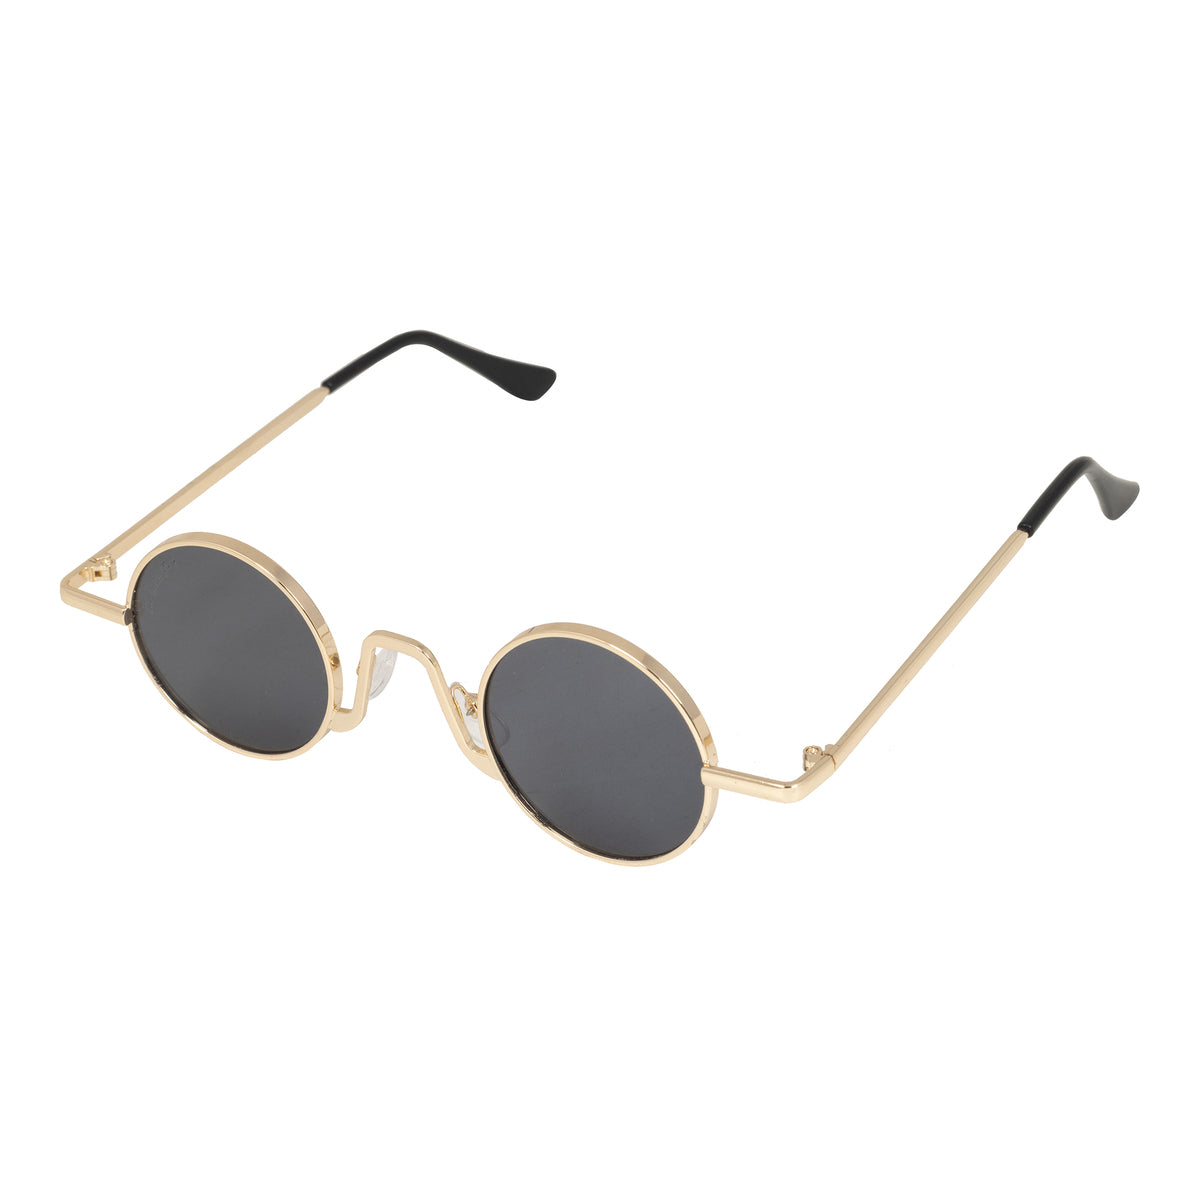 Buy Round Sunglasses For Men - 2 Sunglasses @999 - Woggles